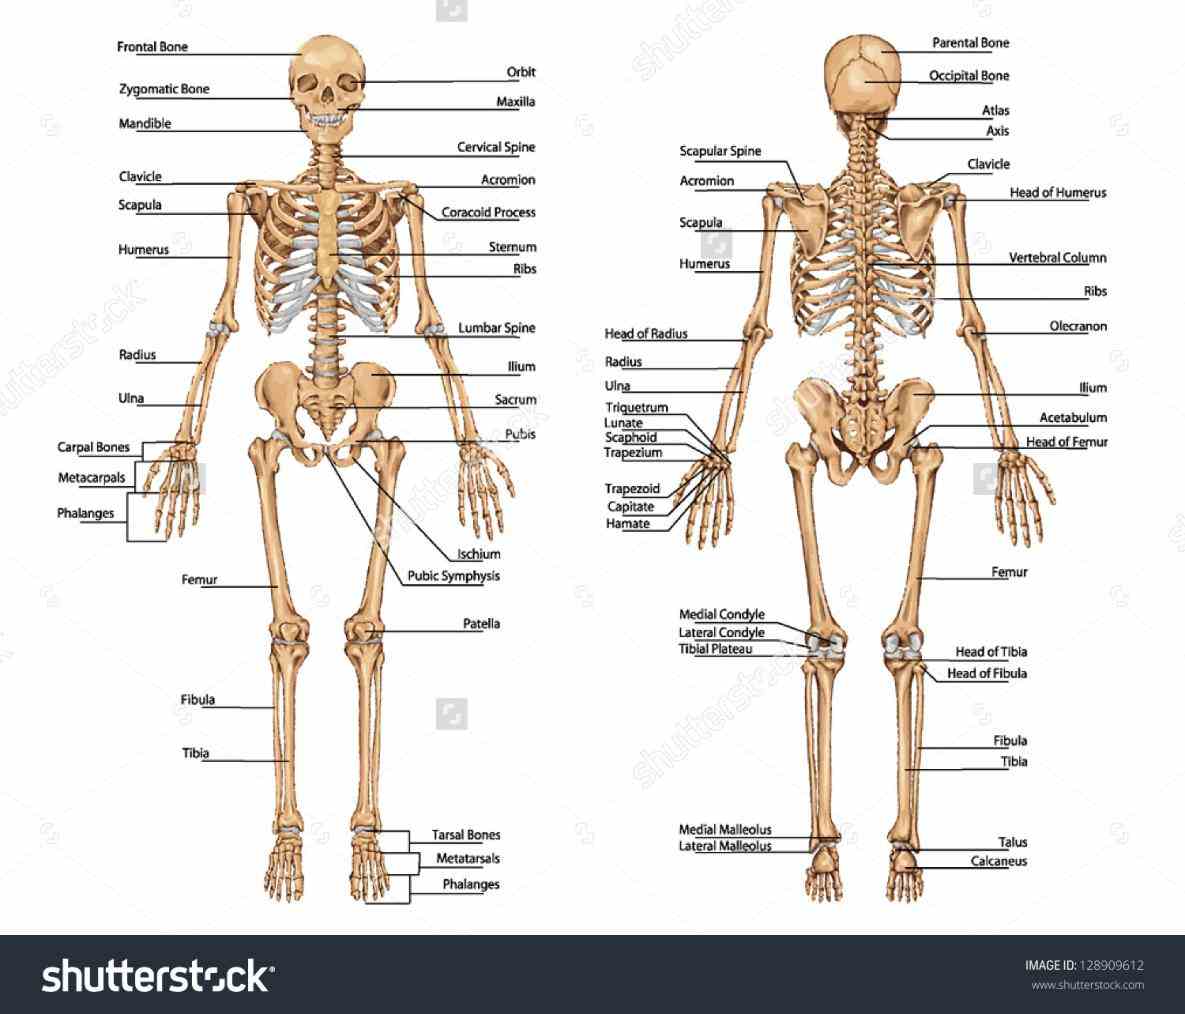 Major Bones Of The Human Skeleton Anatomy Pictures Wallpapers